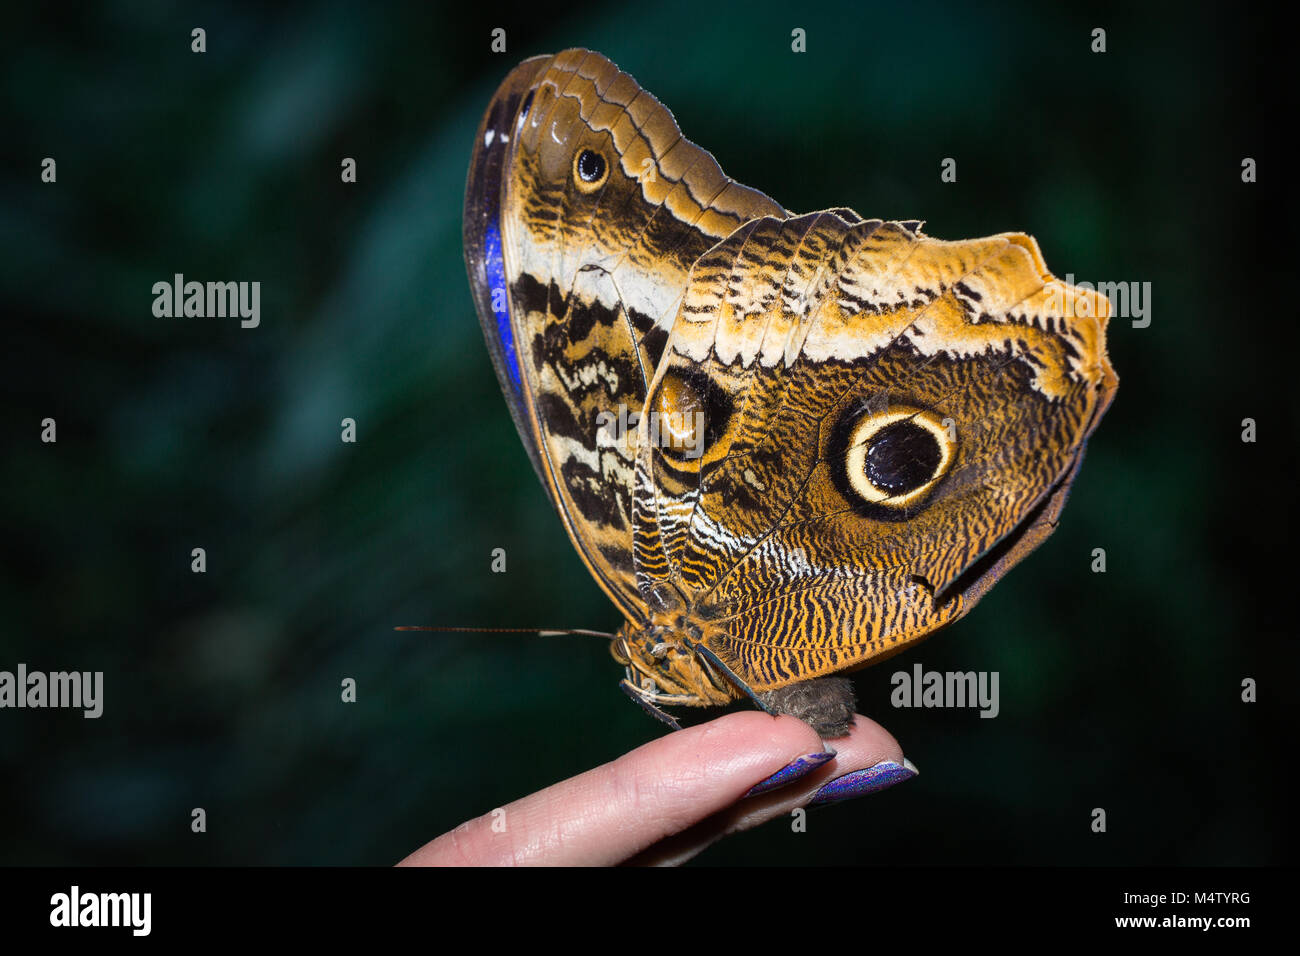 Butterfly Morpho peleides on hand fingers Stock Photo